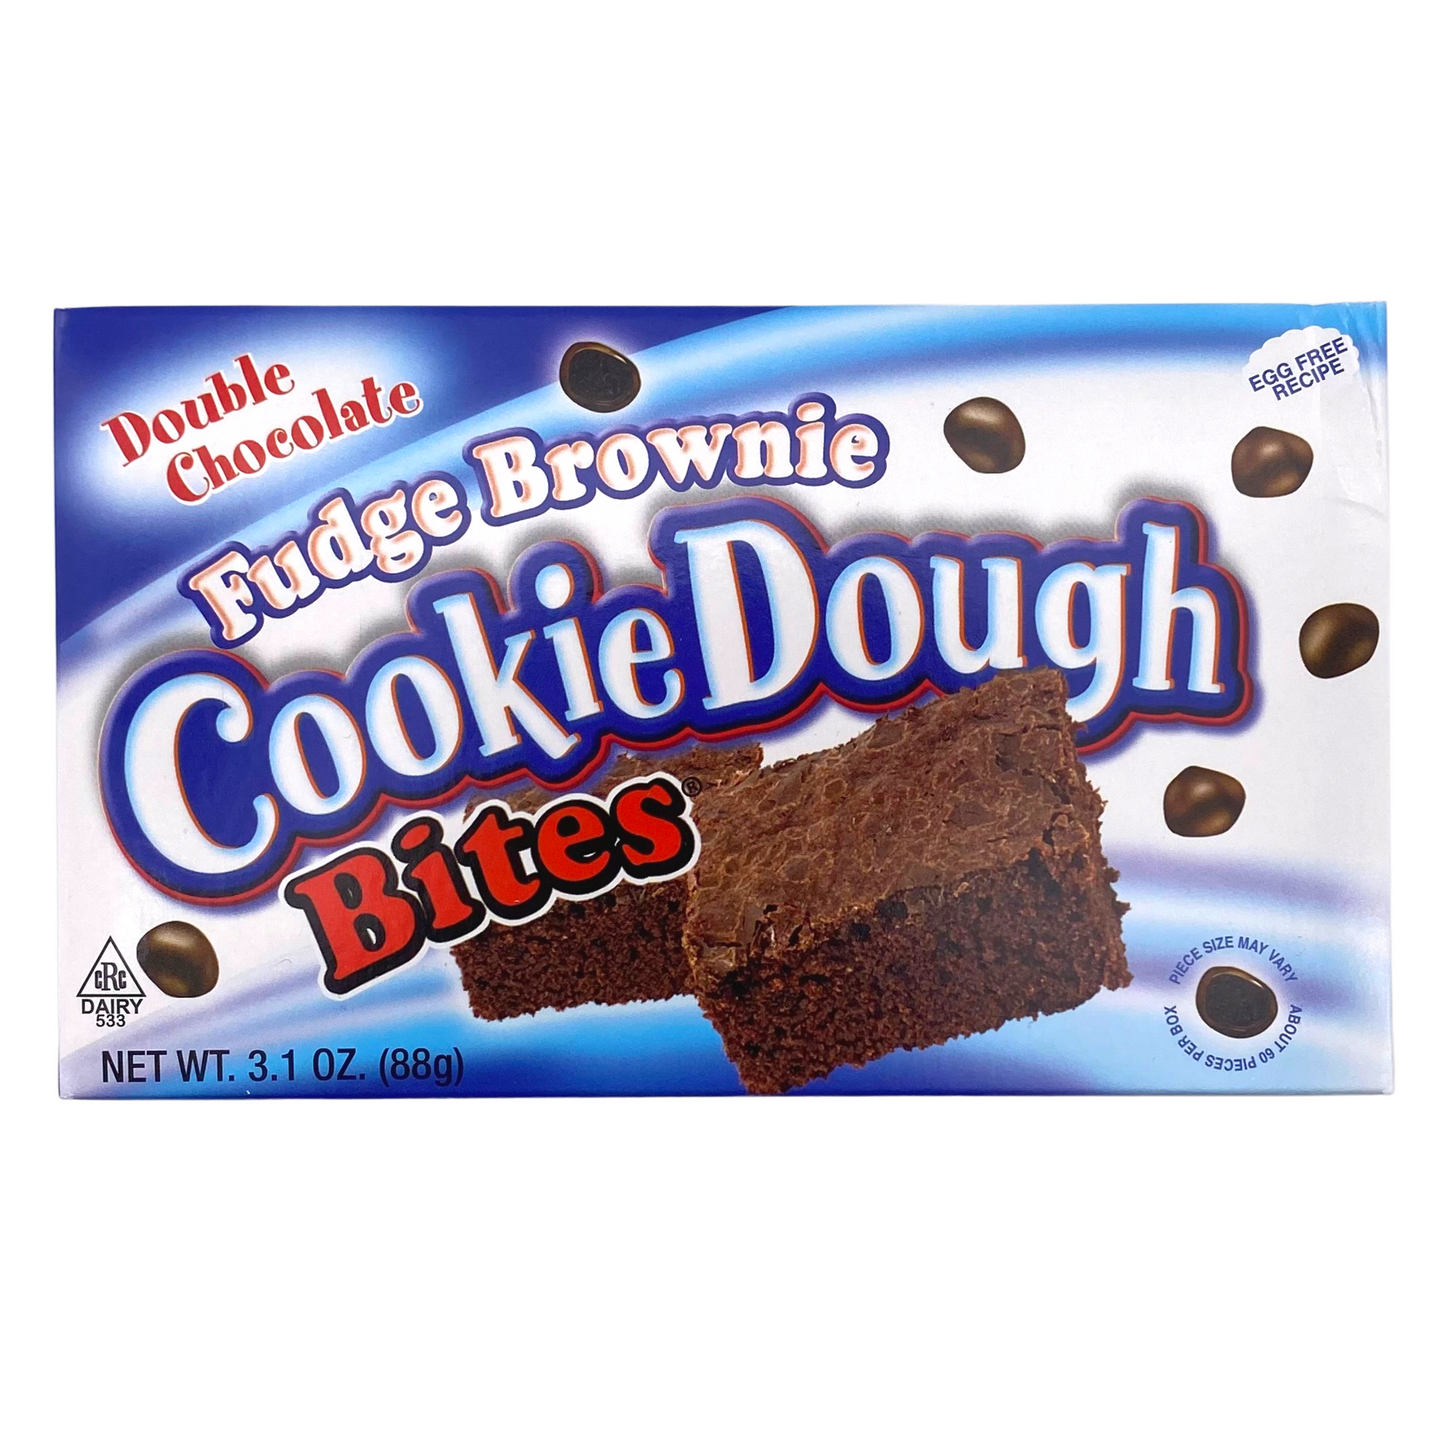 Cookie Dough Bites Fudge Brownie